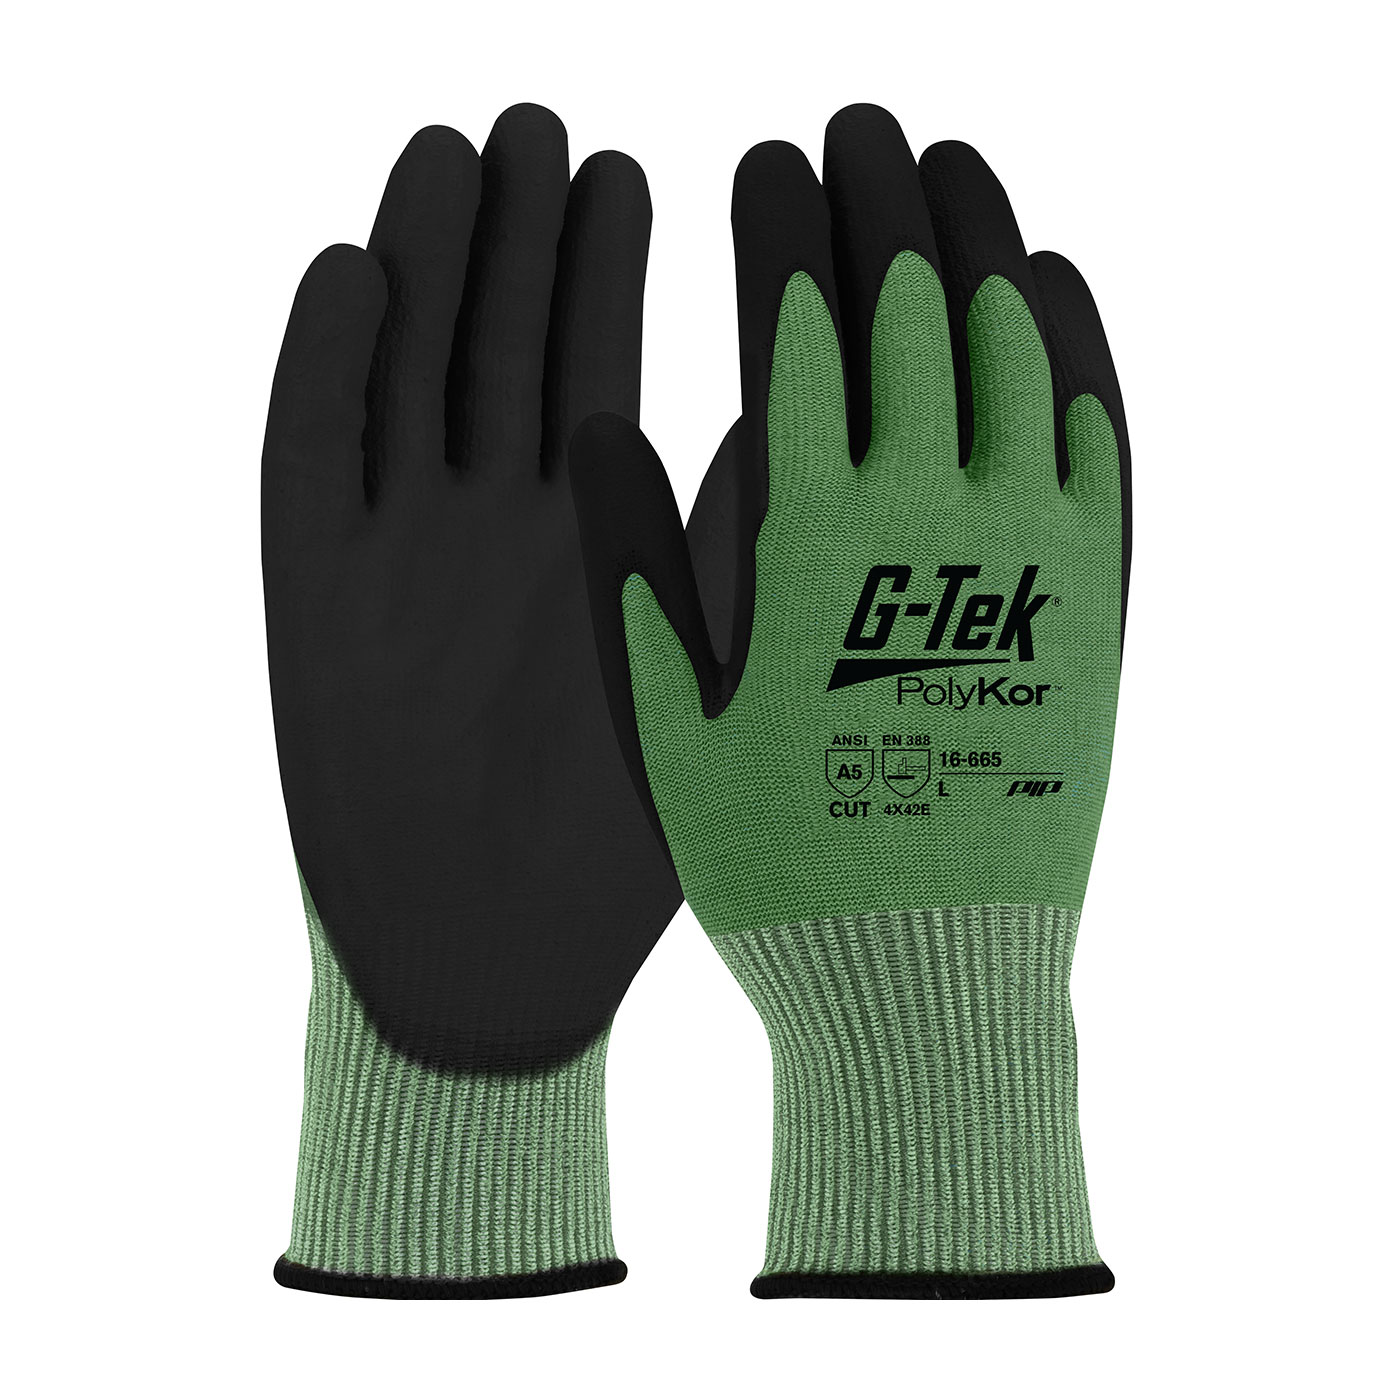  #16-665 PIP® G-Tek® PolyKor™ PU Coated Grip A5 Cut Gloves